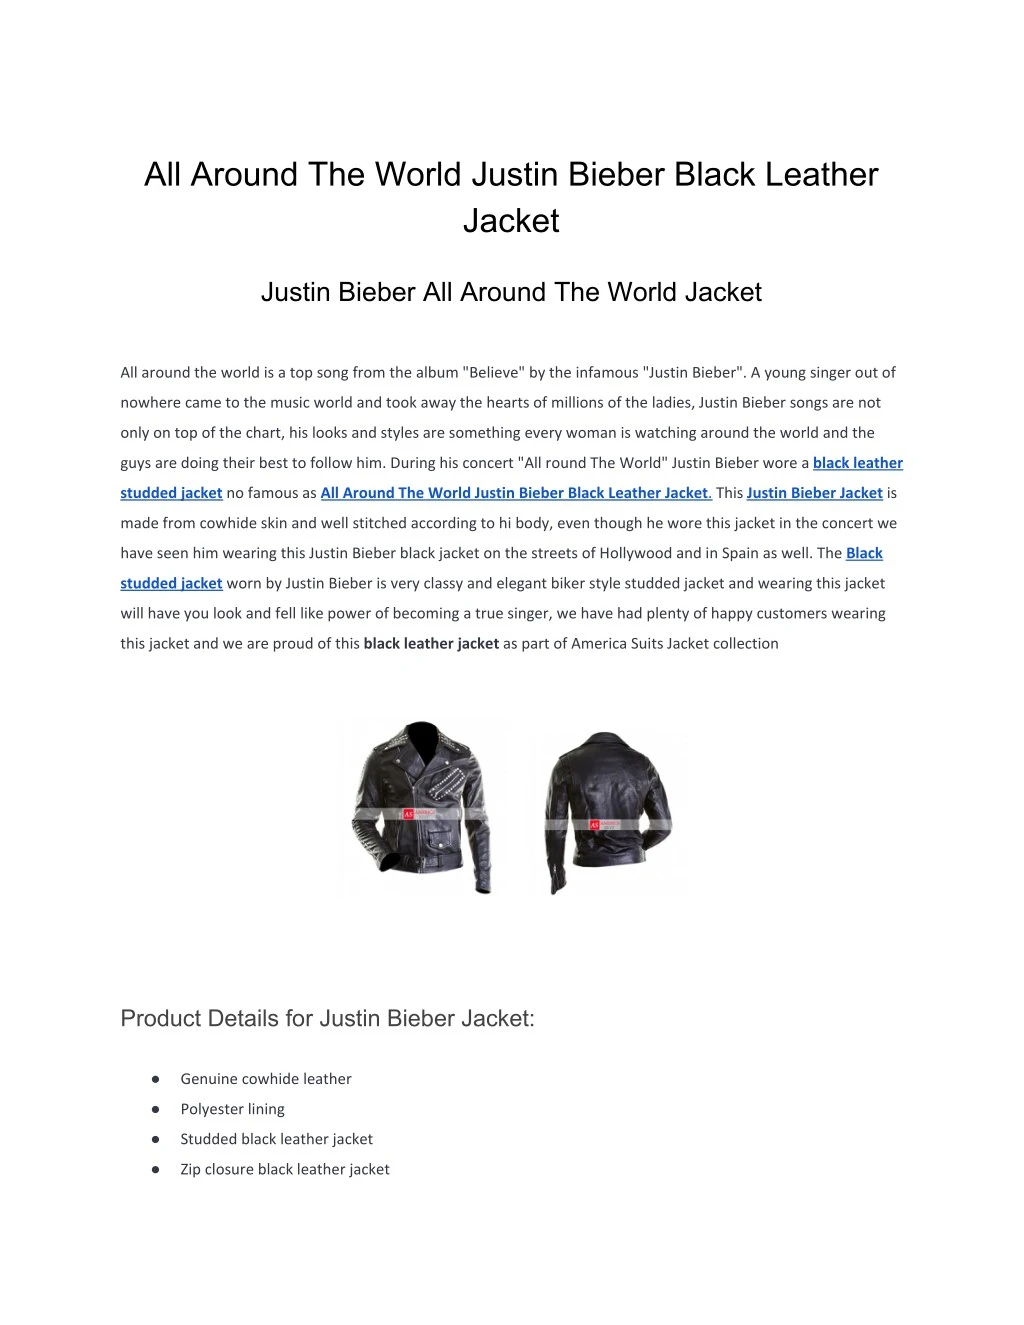 all around the world justin bieber black leather